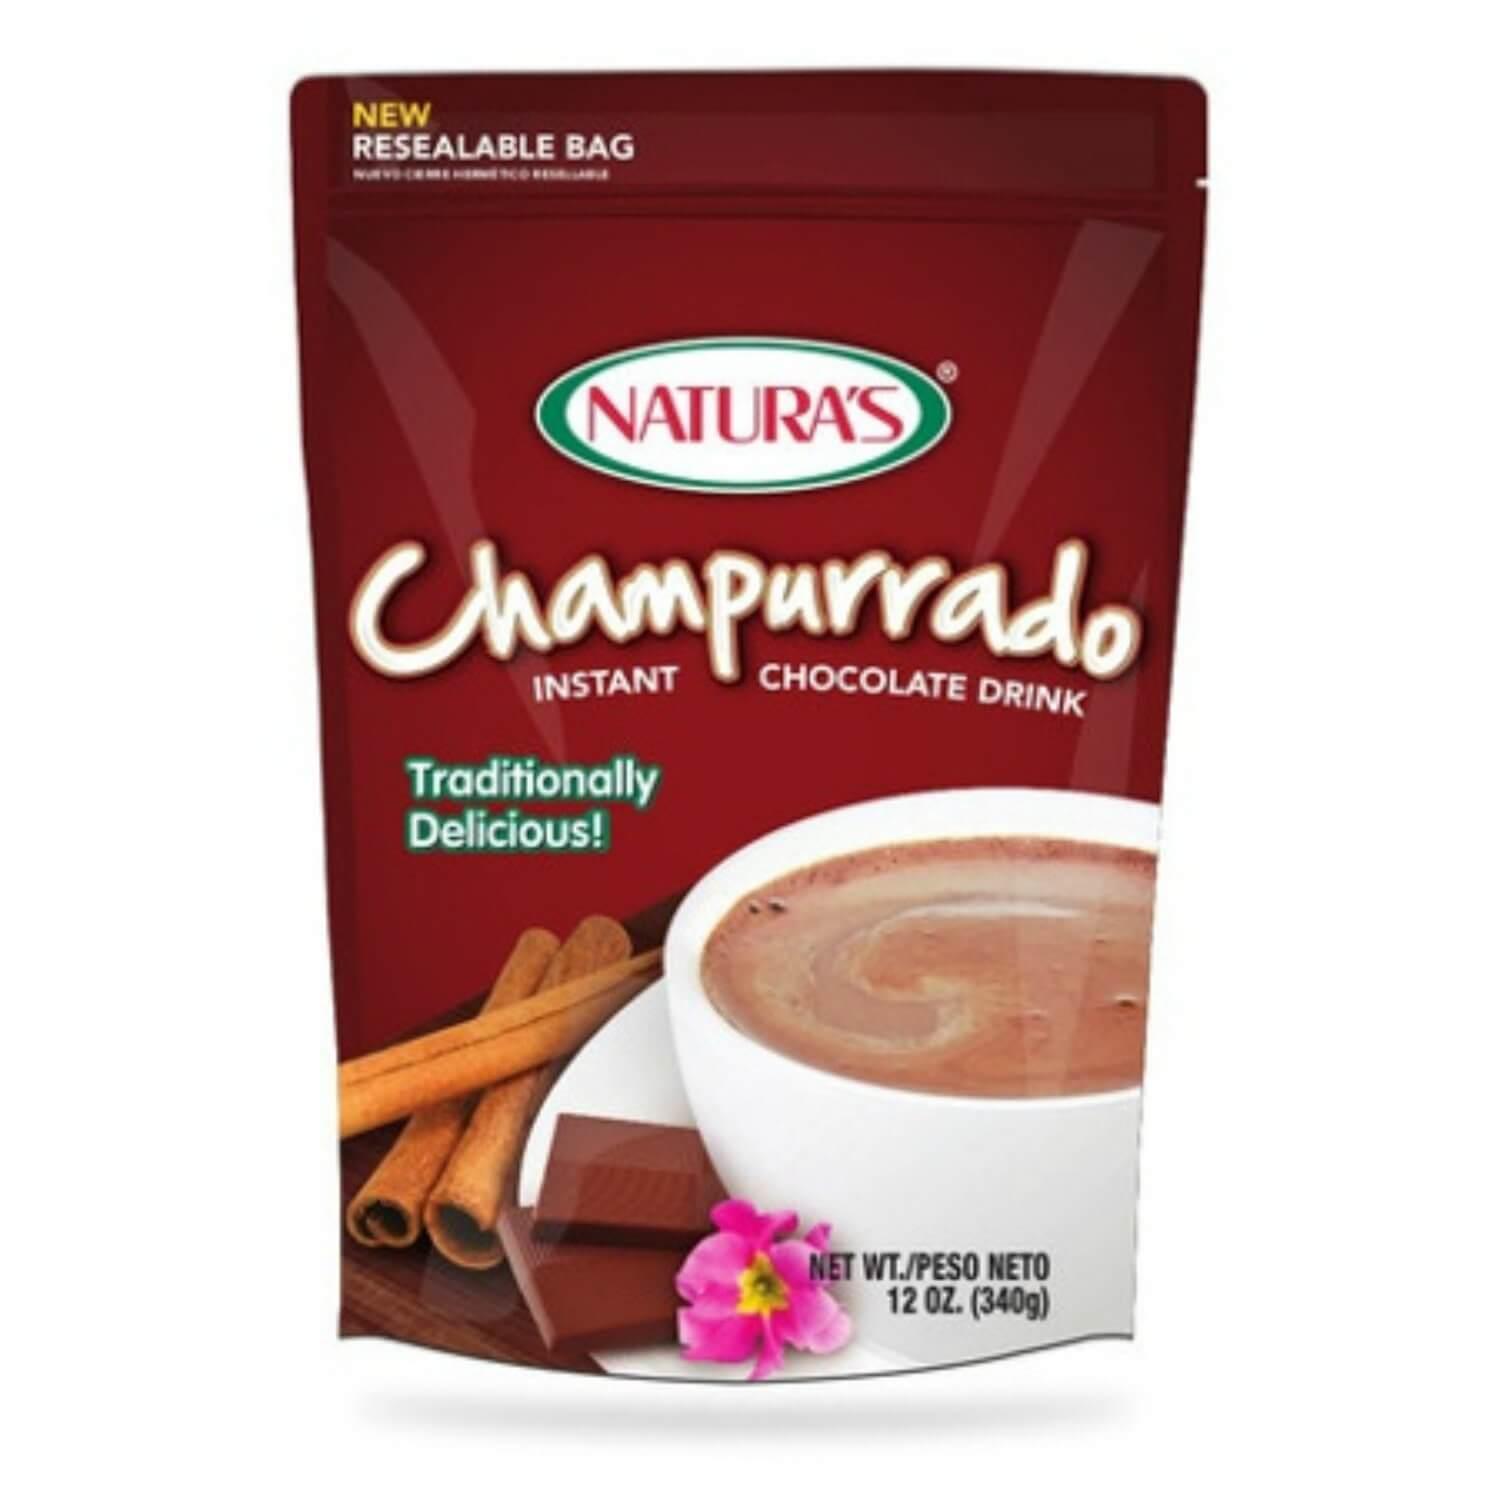 Natura's - Champurrado Instant Chocolate Drink 12oz.